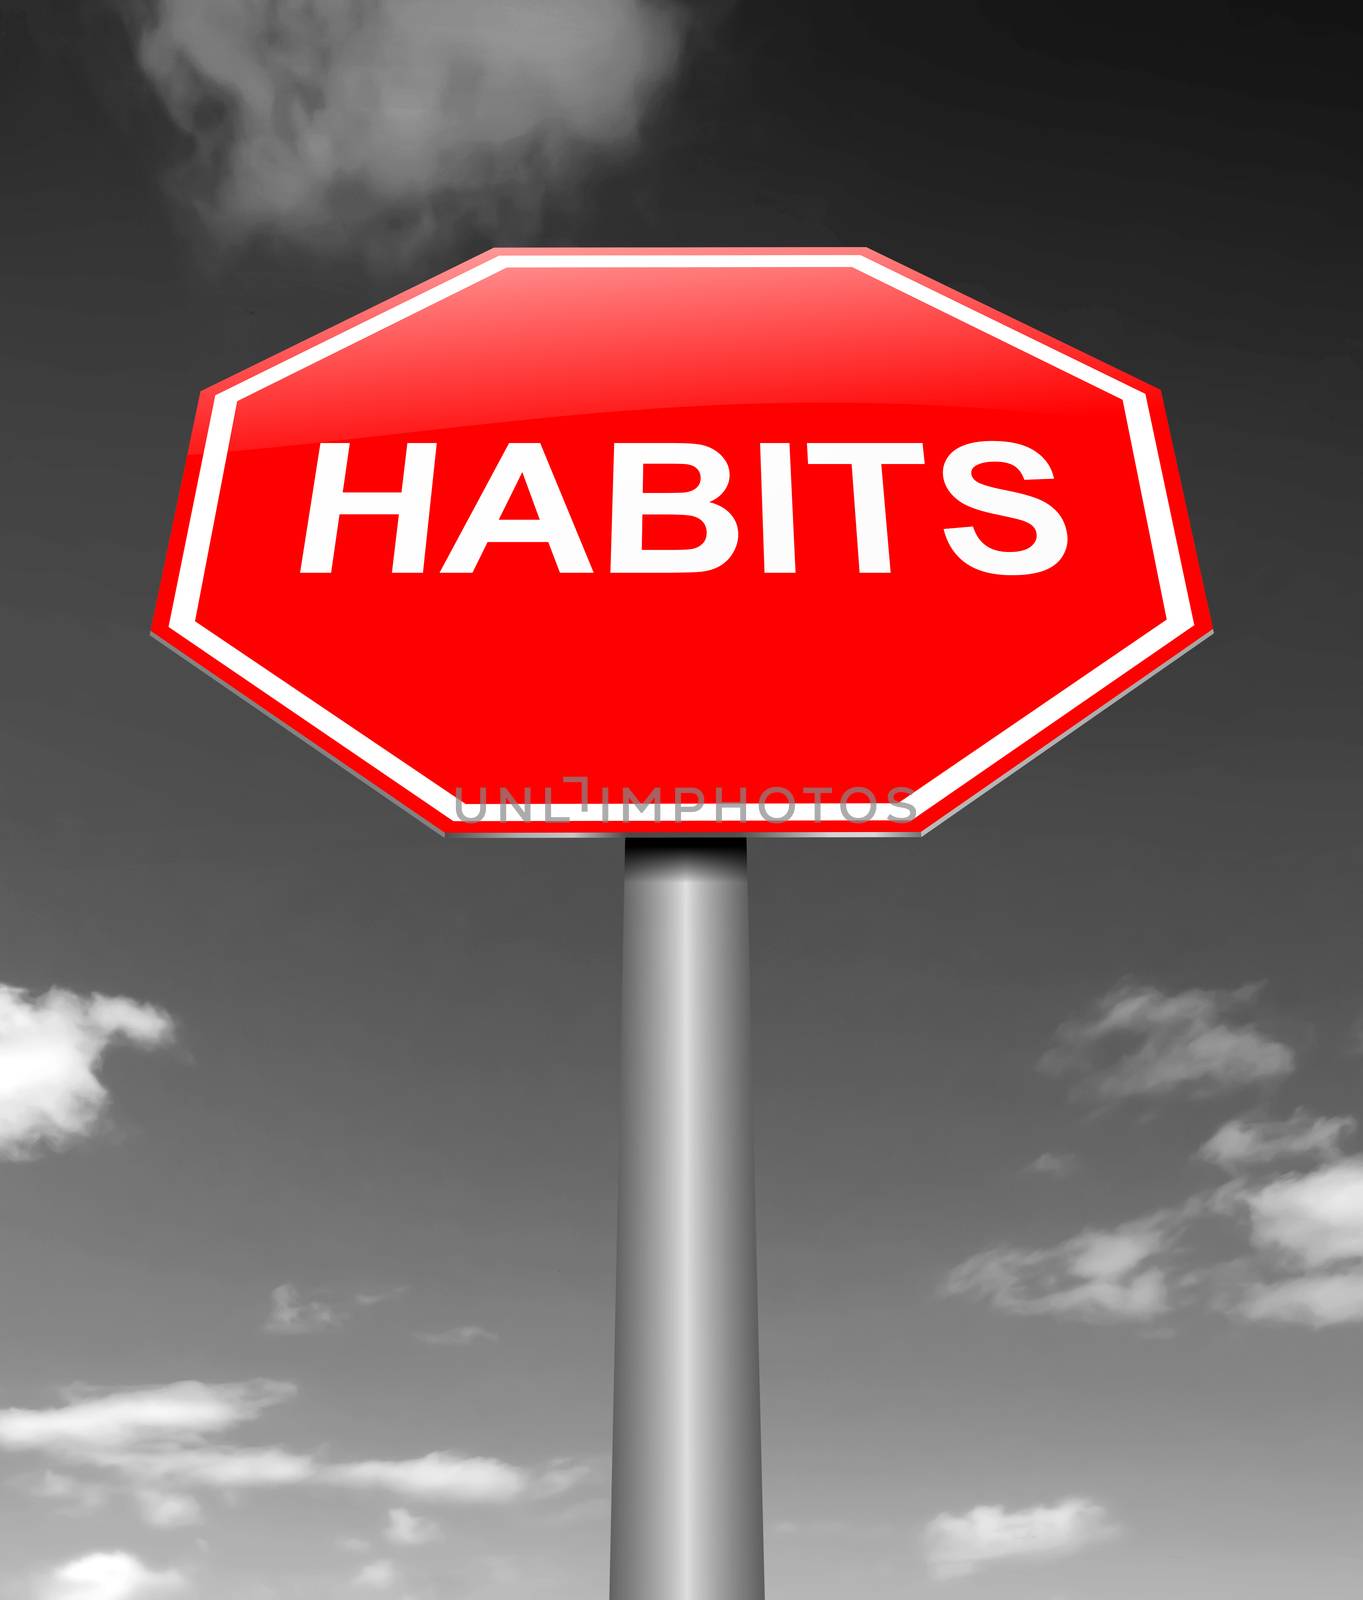 Habits sign concept. by 72soul